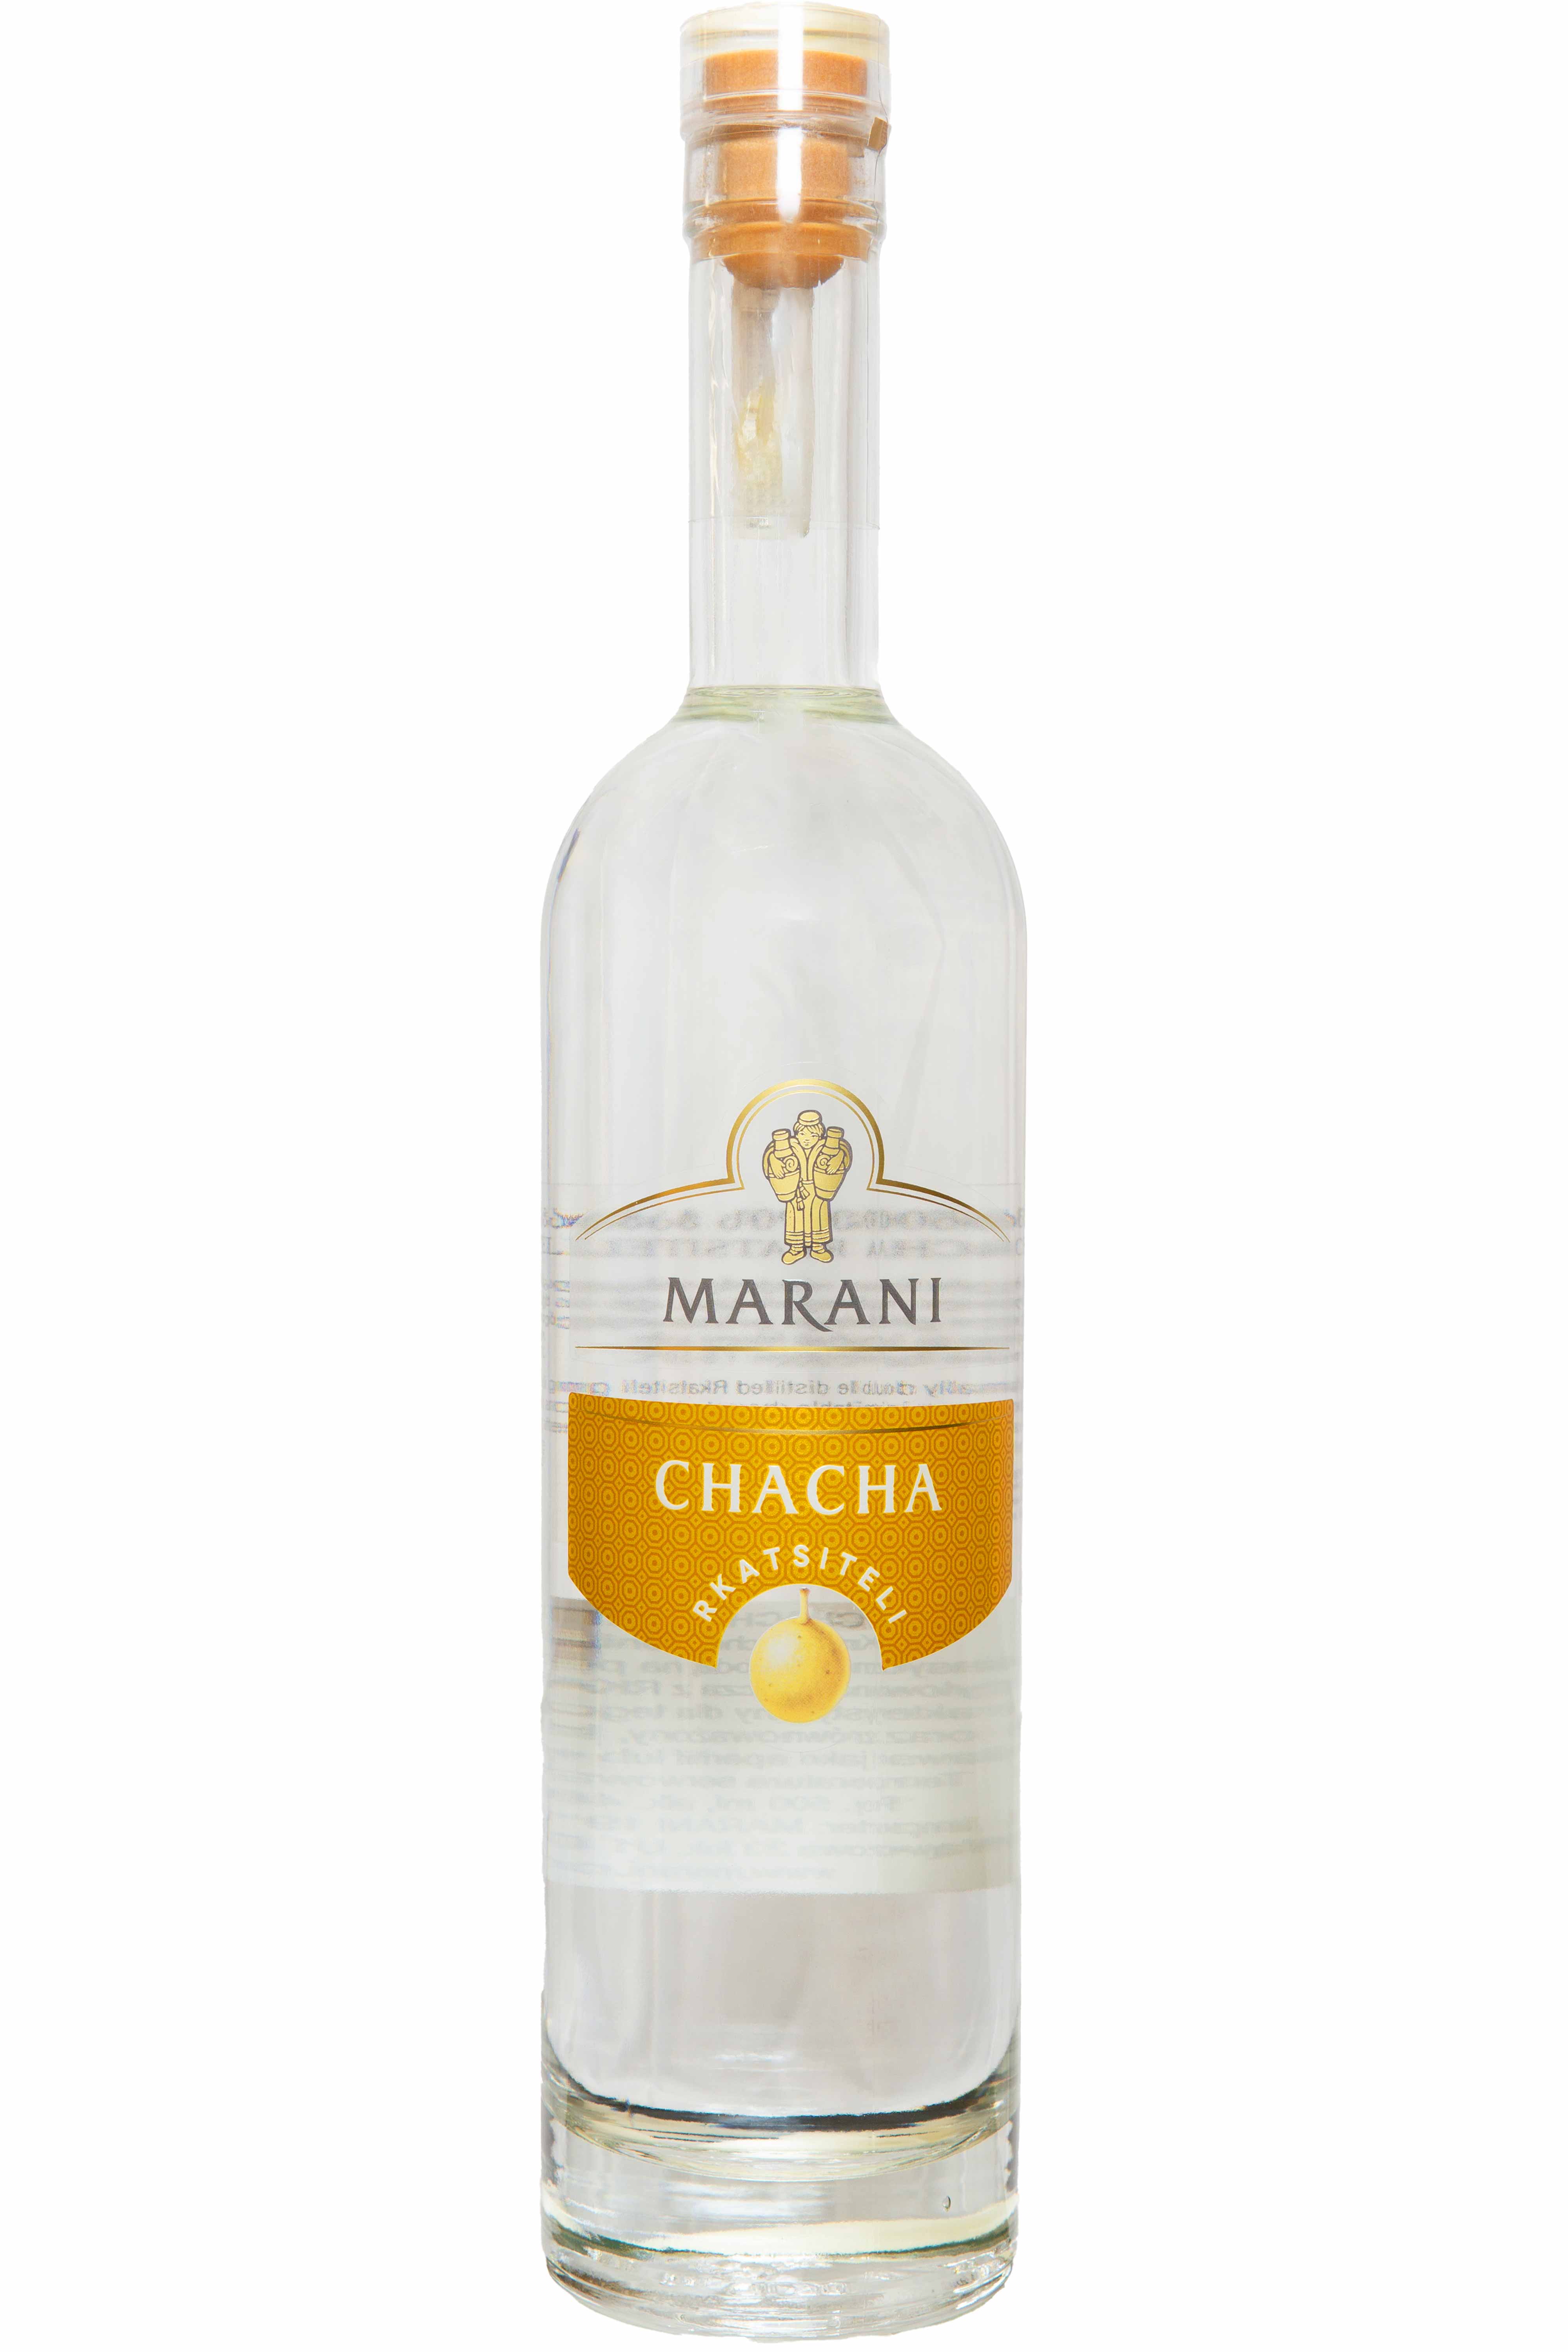 Marani Chacha Rkatsiteli 50cl, Destillat aus georgischen Rkatsiteli-Trauben, intensiv und aromatisch